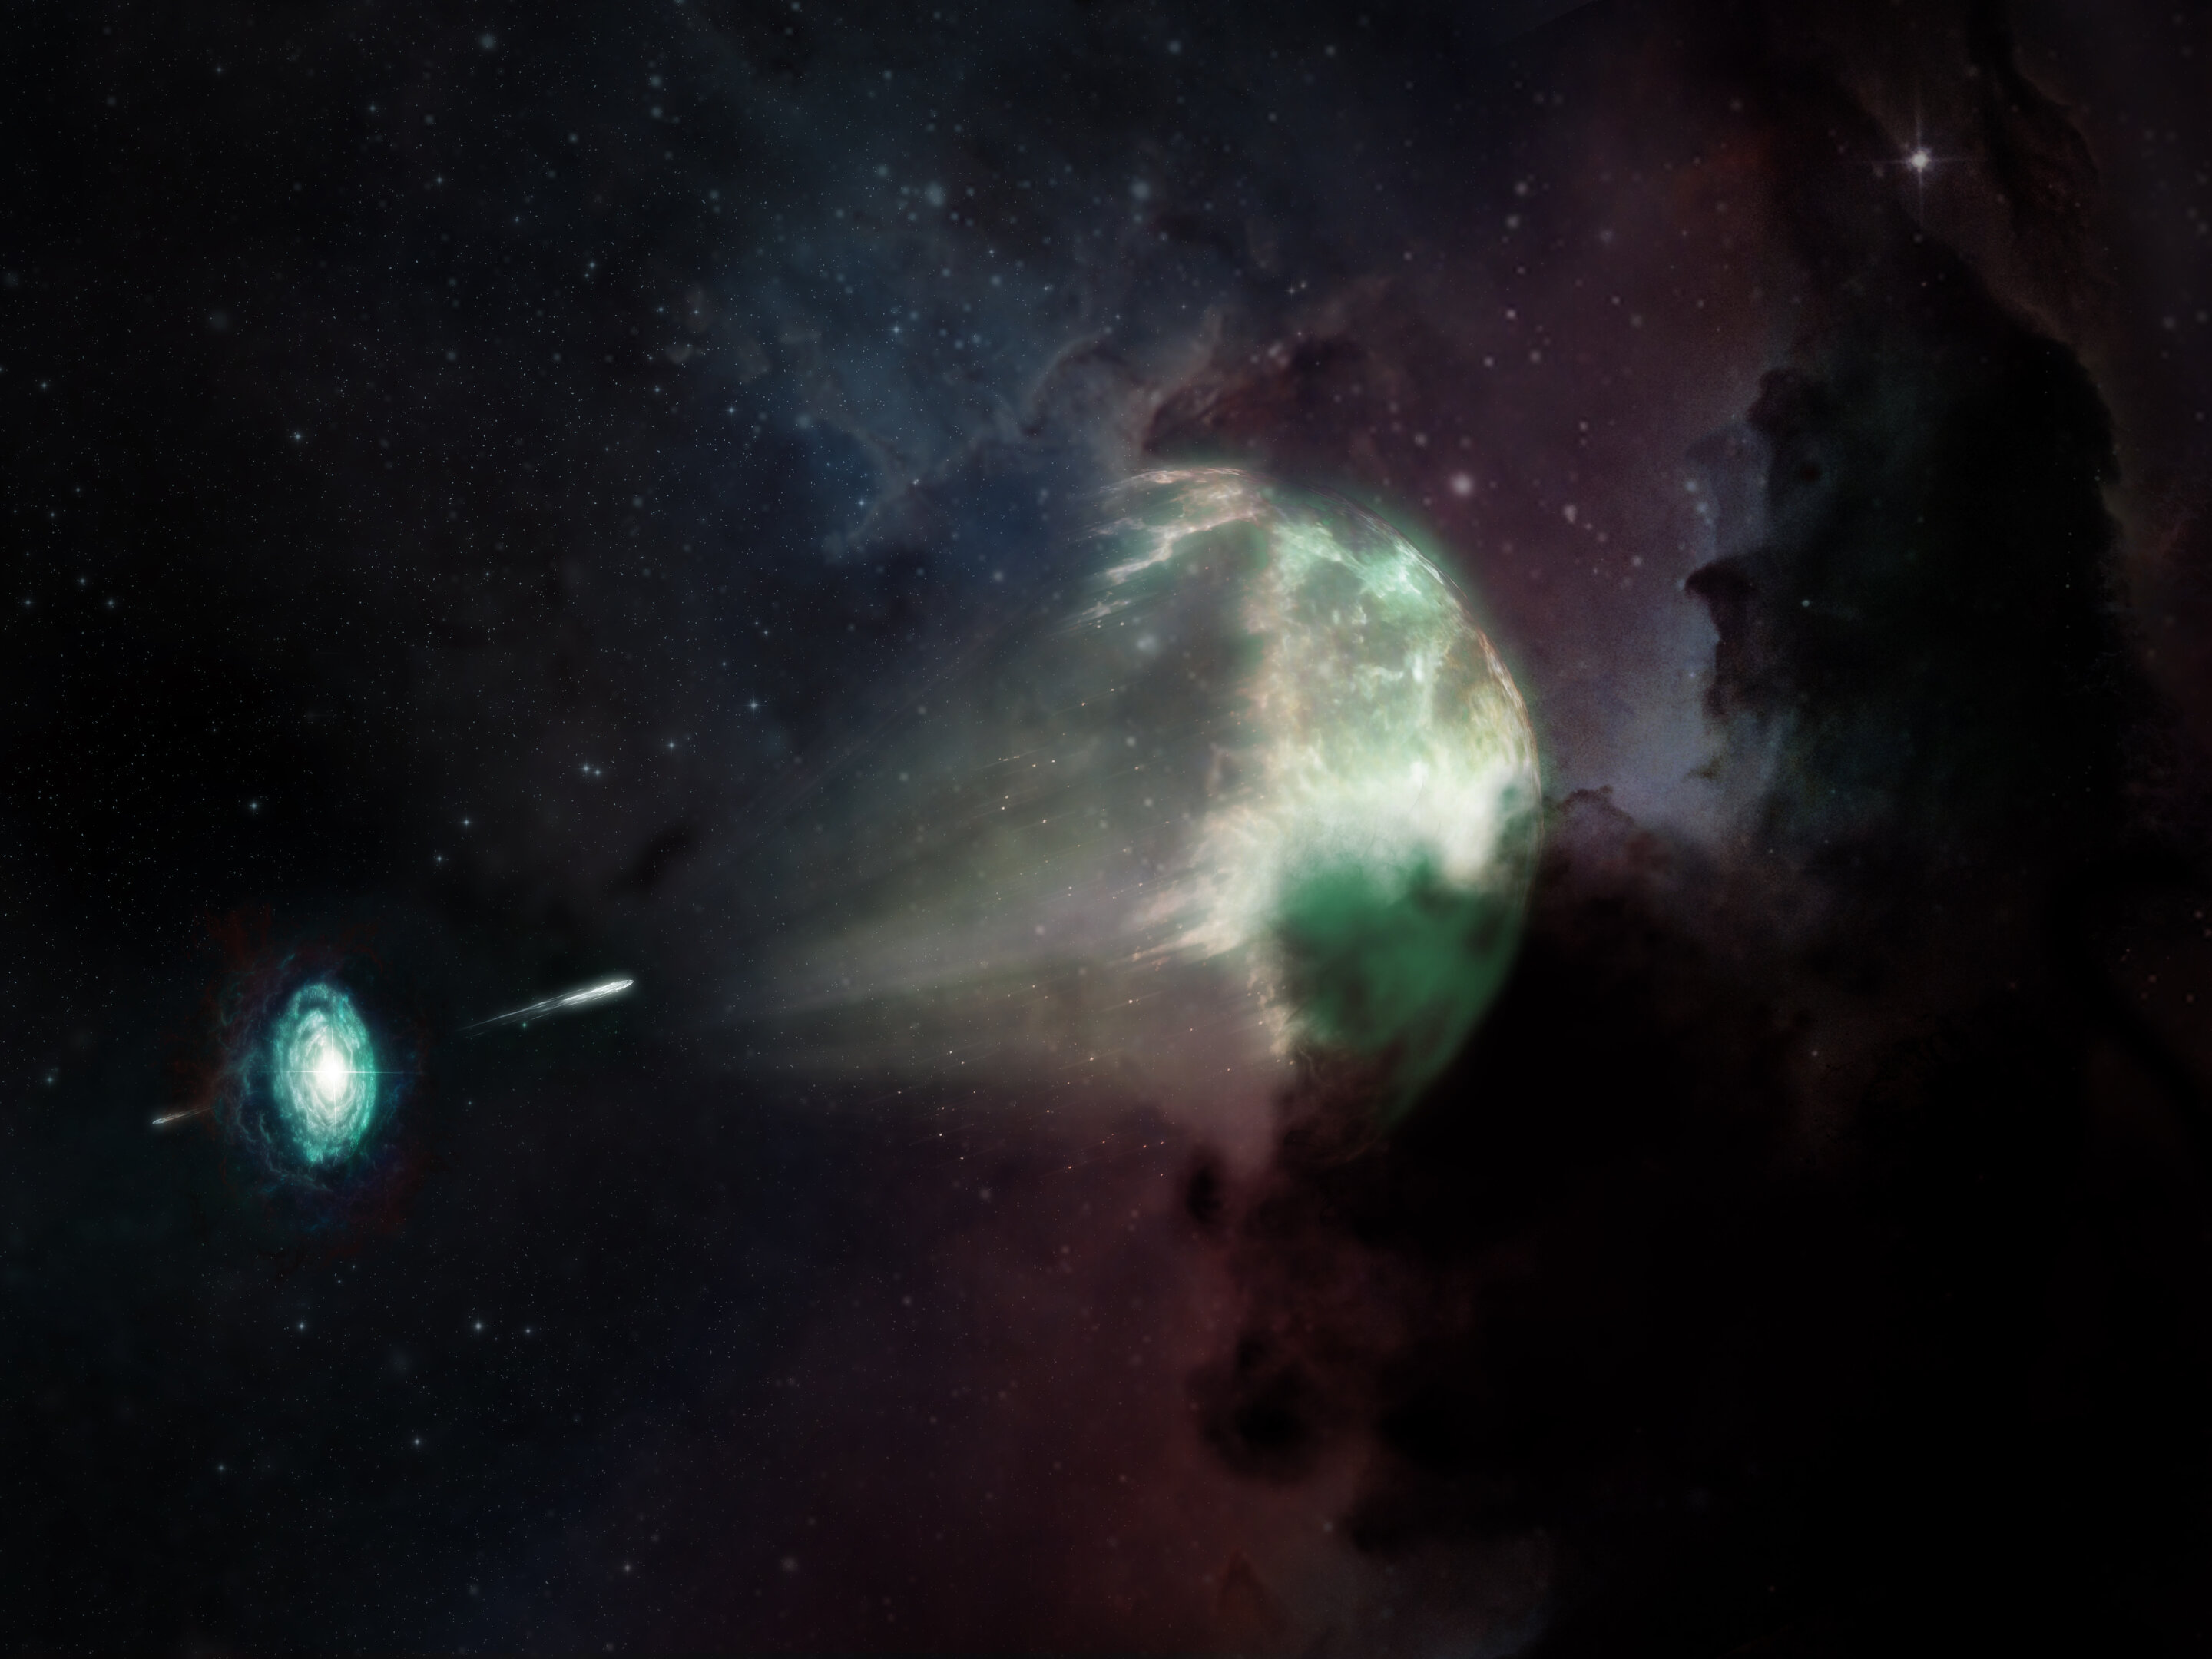 Explosive neutron star merger captured for the first time in millimeter light